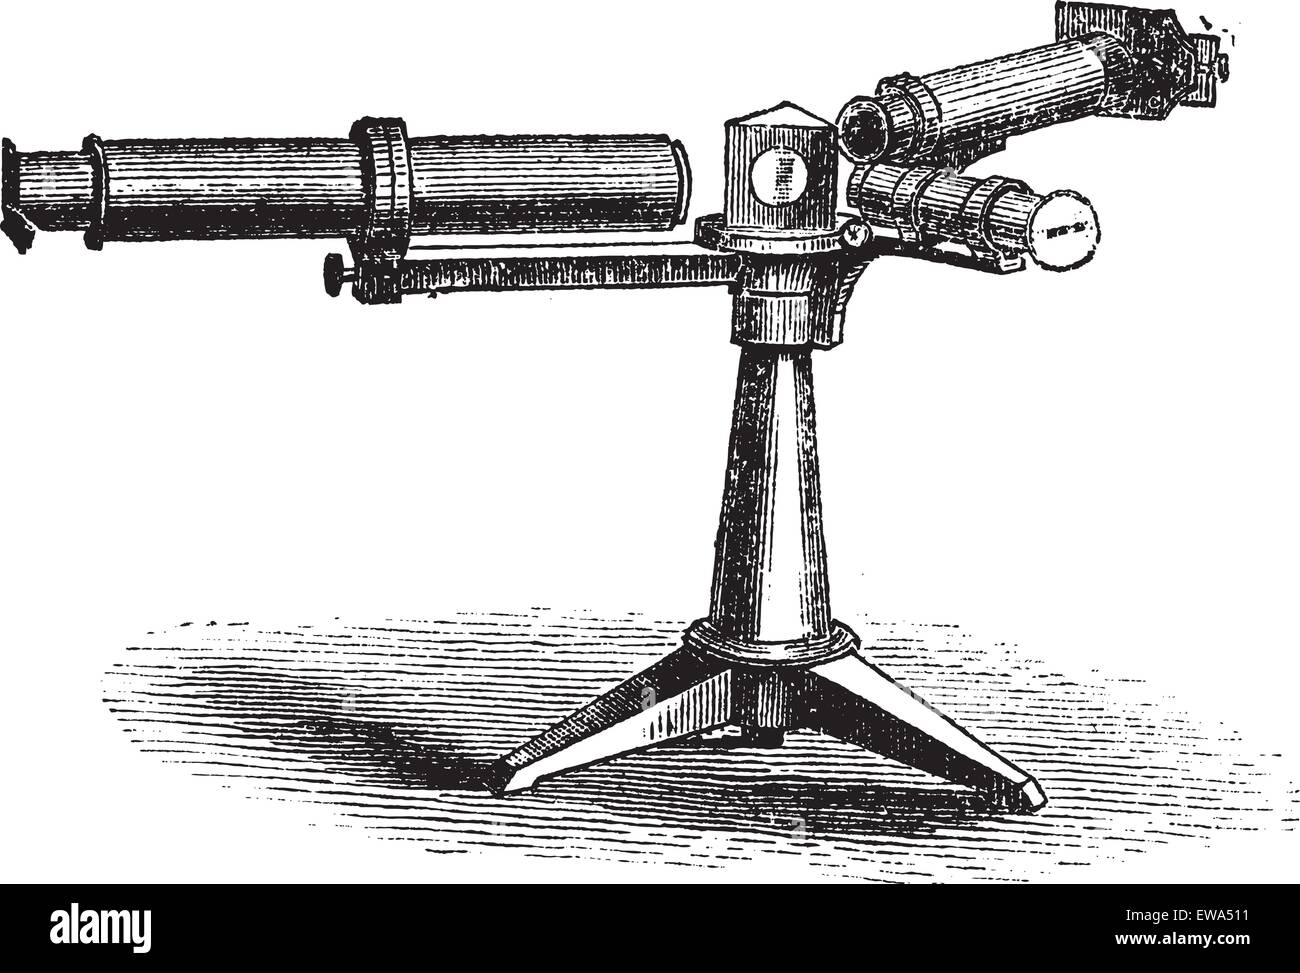 Spectroscope or Spectrometer or Spectrophotometer or Spectrograph, vintage engraving. Old engraved illustration of Spectroscope. Stock Vector